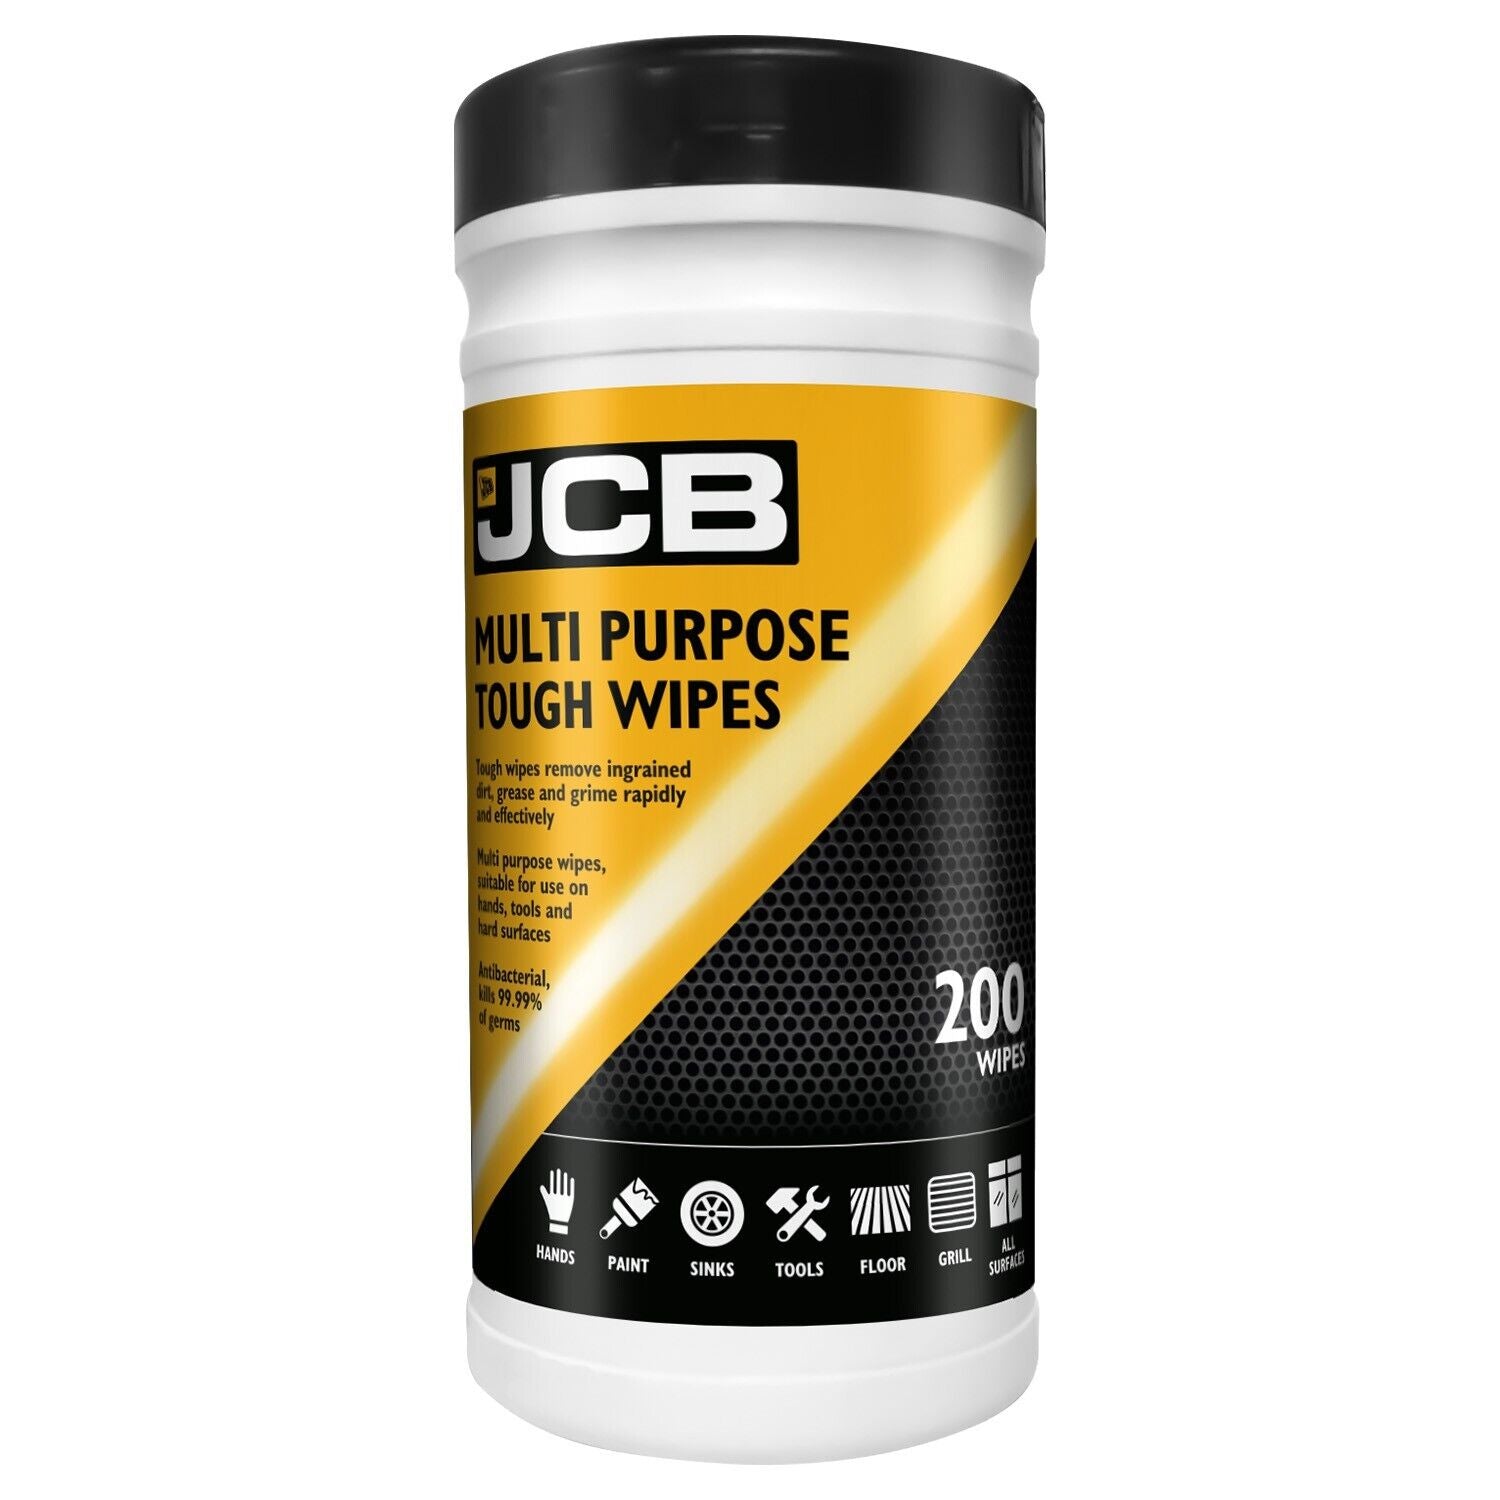 JCB Multi Purpose Tough Wipes 200 Wipes